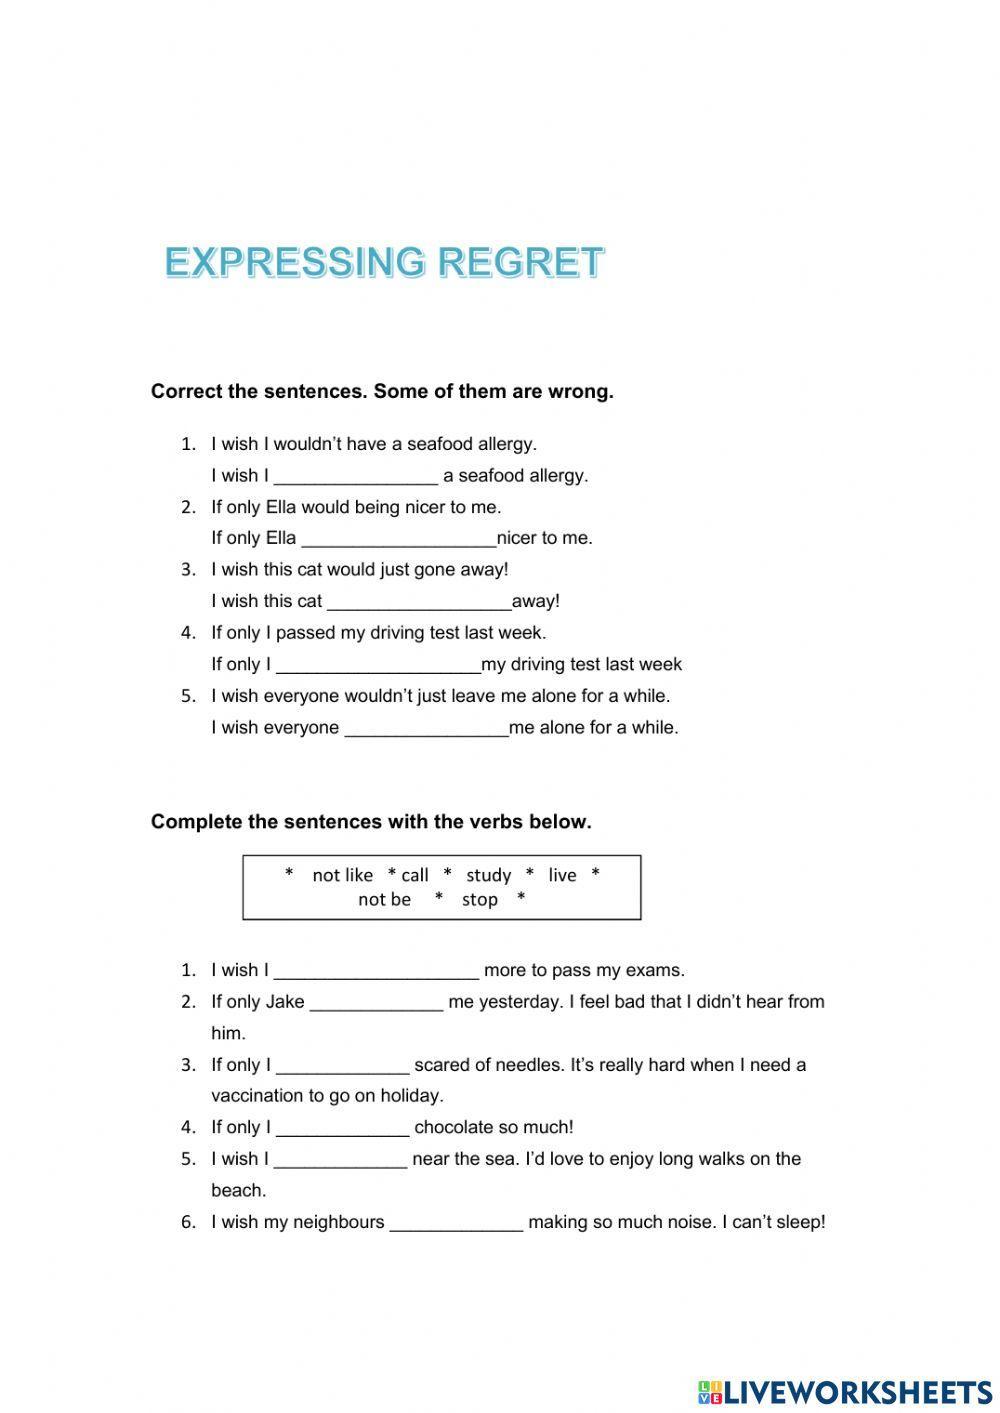 Expressing regret